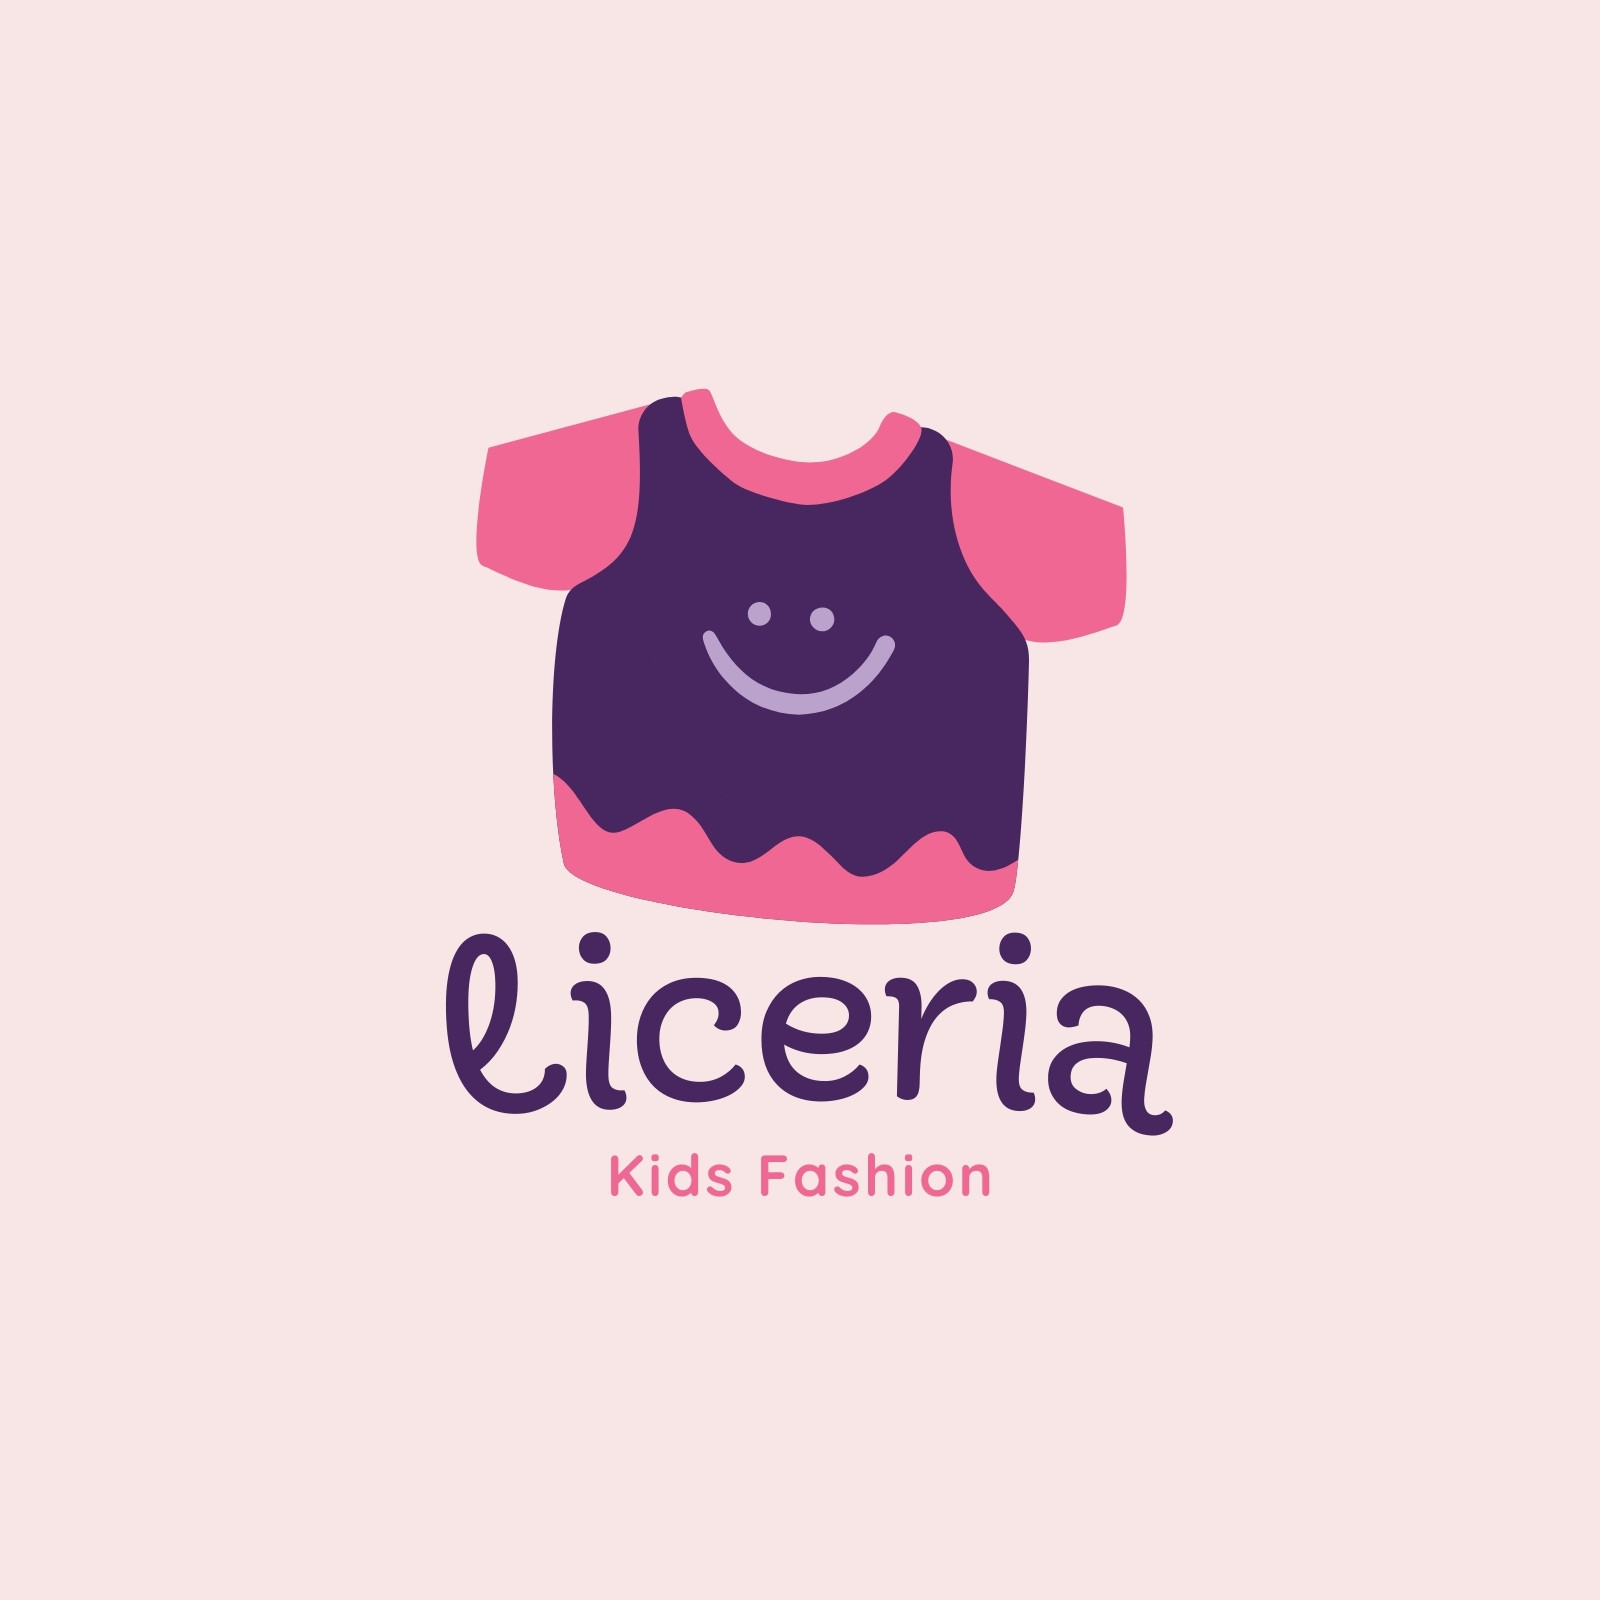 Customize 1,814+ Clothing Logo Templates Online - Canva